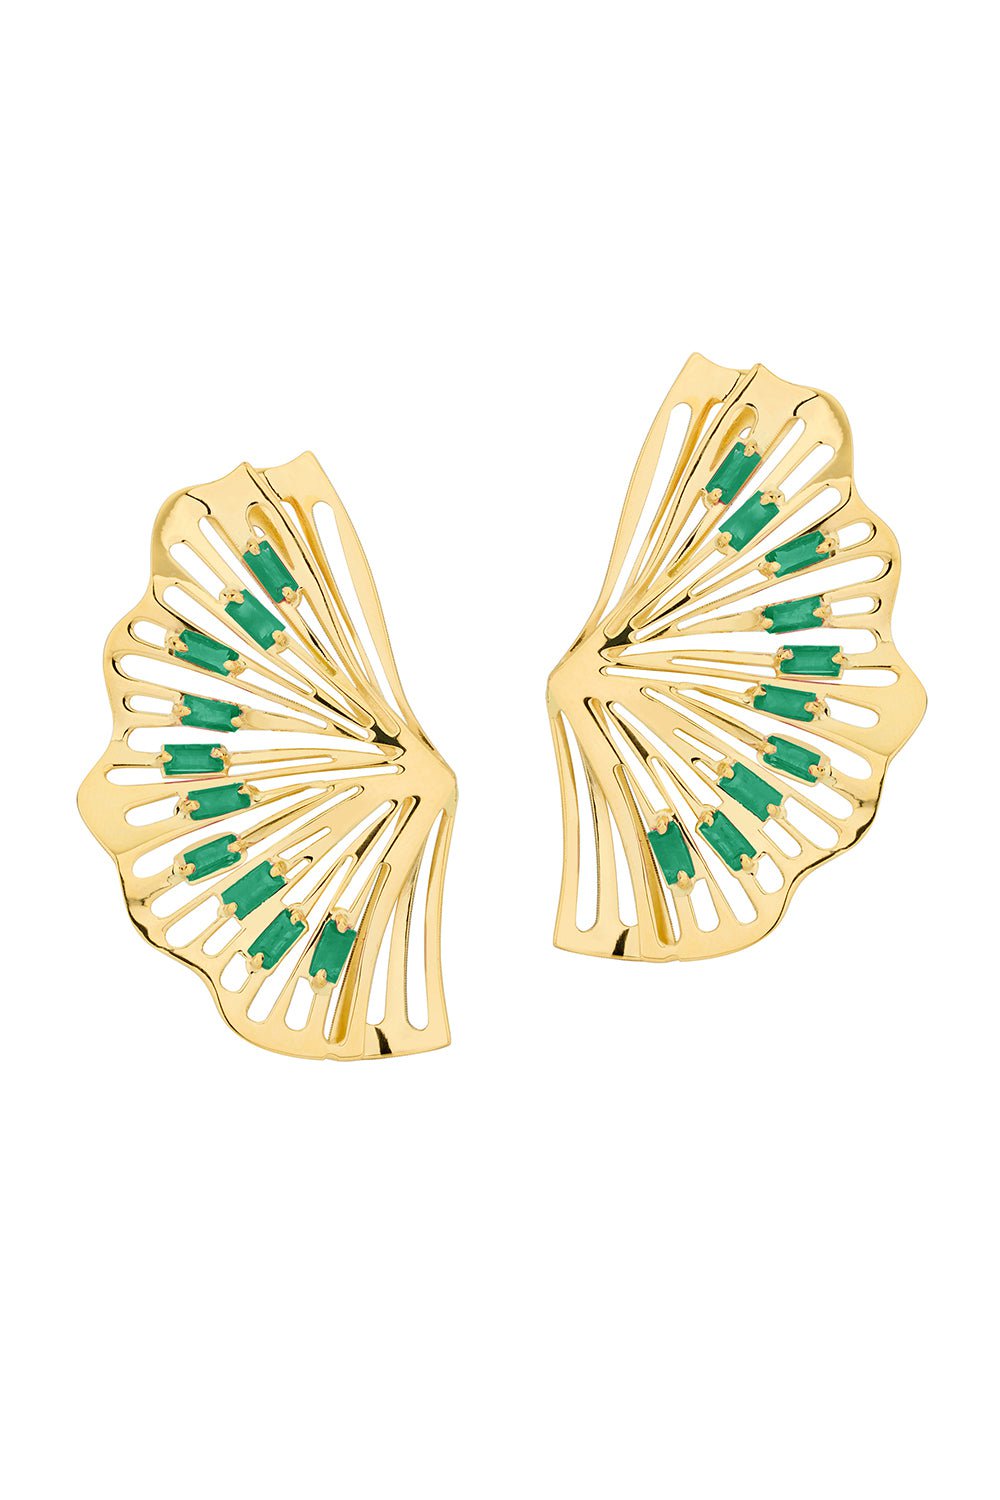 CAROL KAUFFMANN-Nouveau Baguette Earrings-YELLOW GOLD